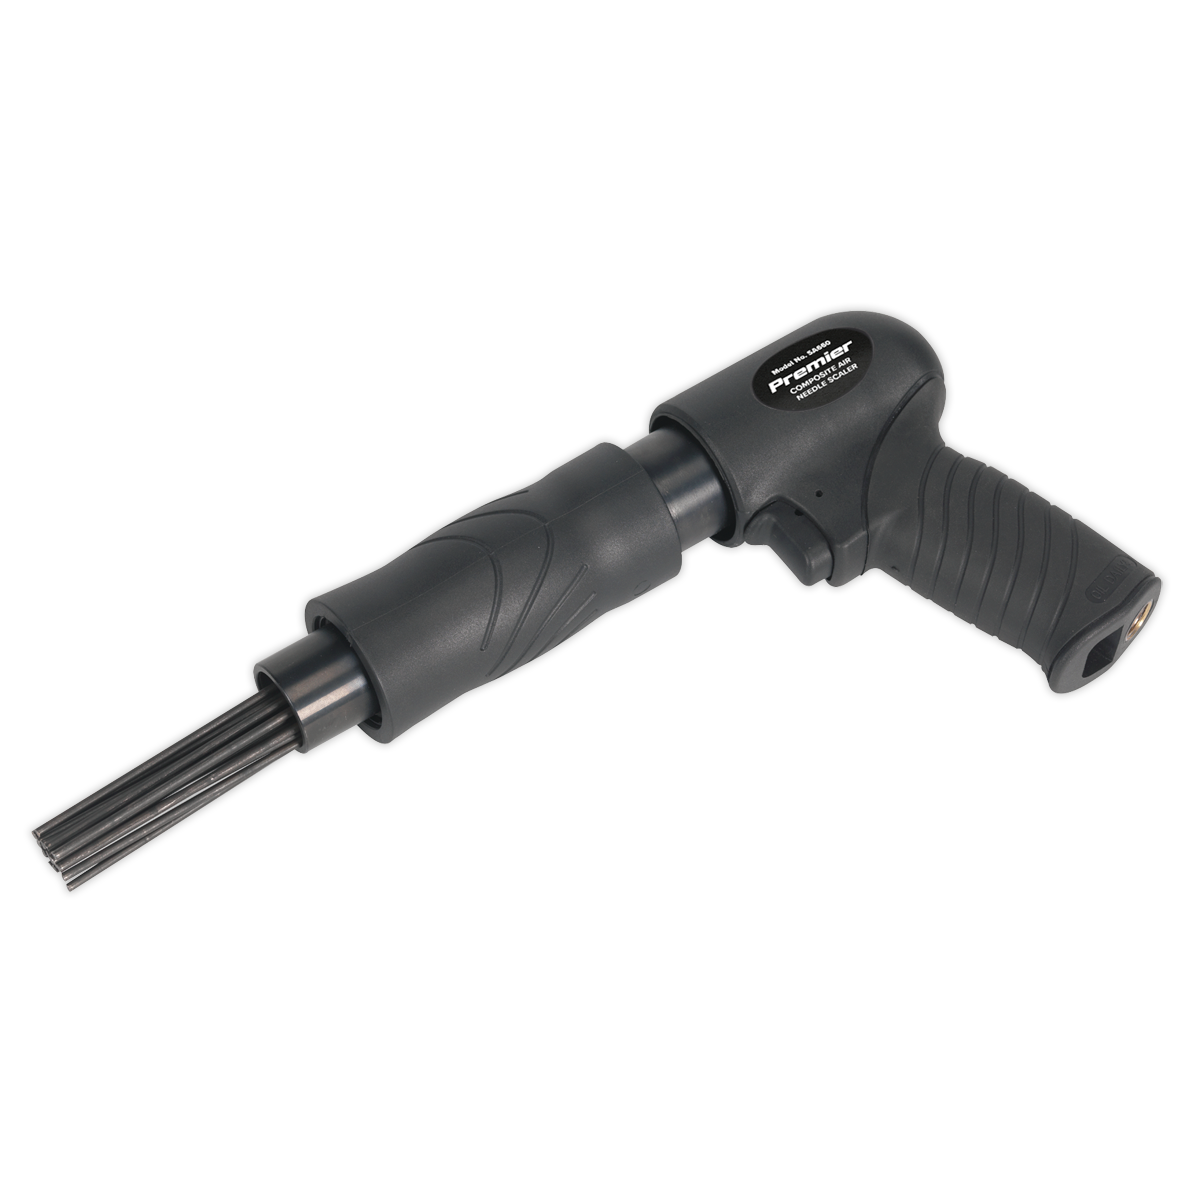 Sealey Air Needle Scaler Composite Pistol Type